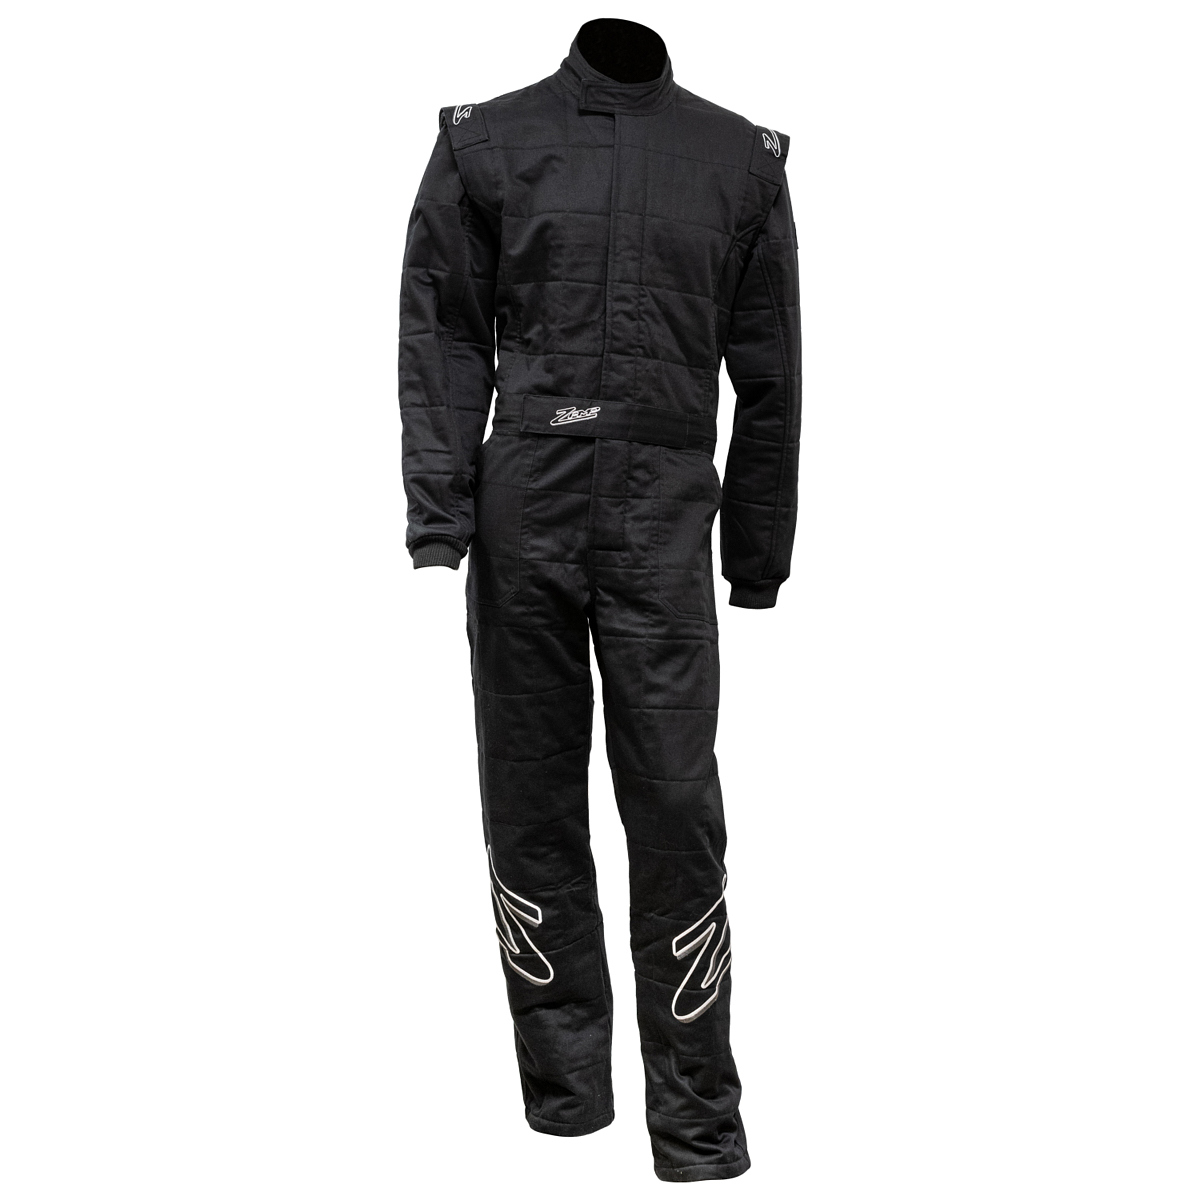 ZAMP Suit ZR-30 Small Black SFI3.2A/5